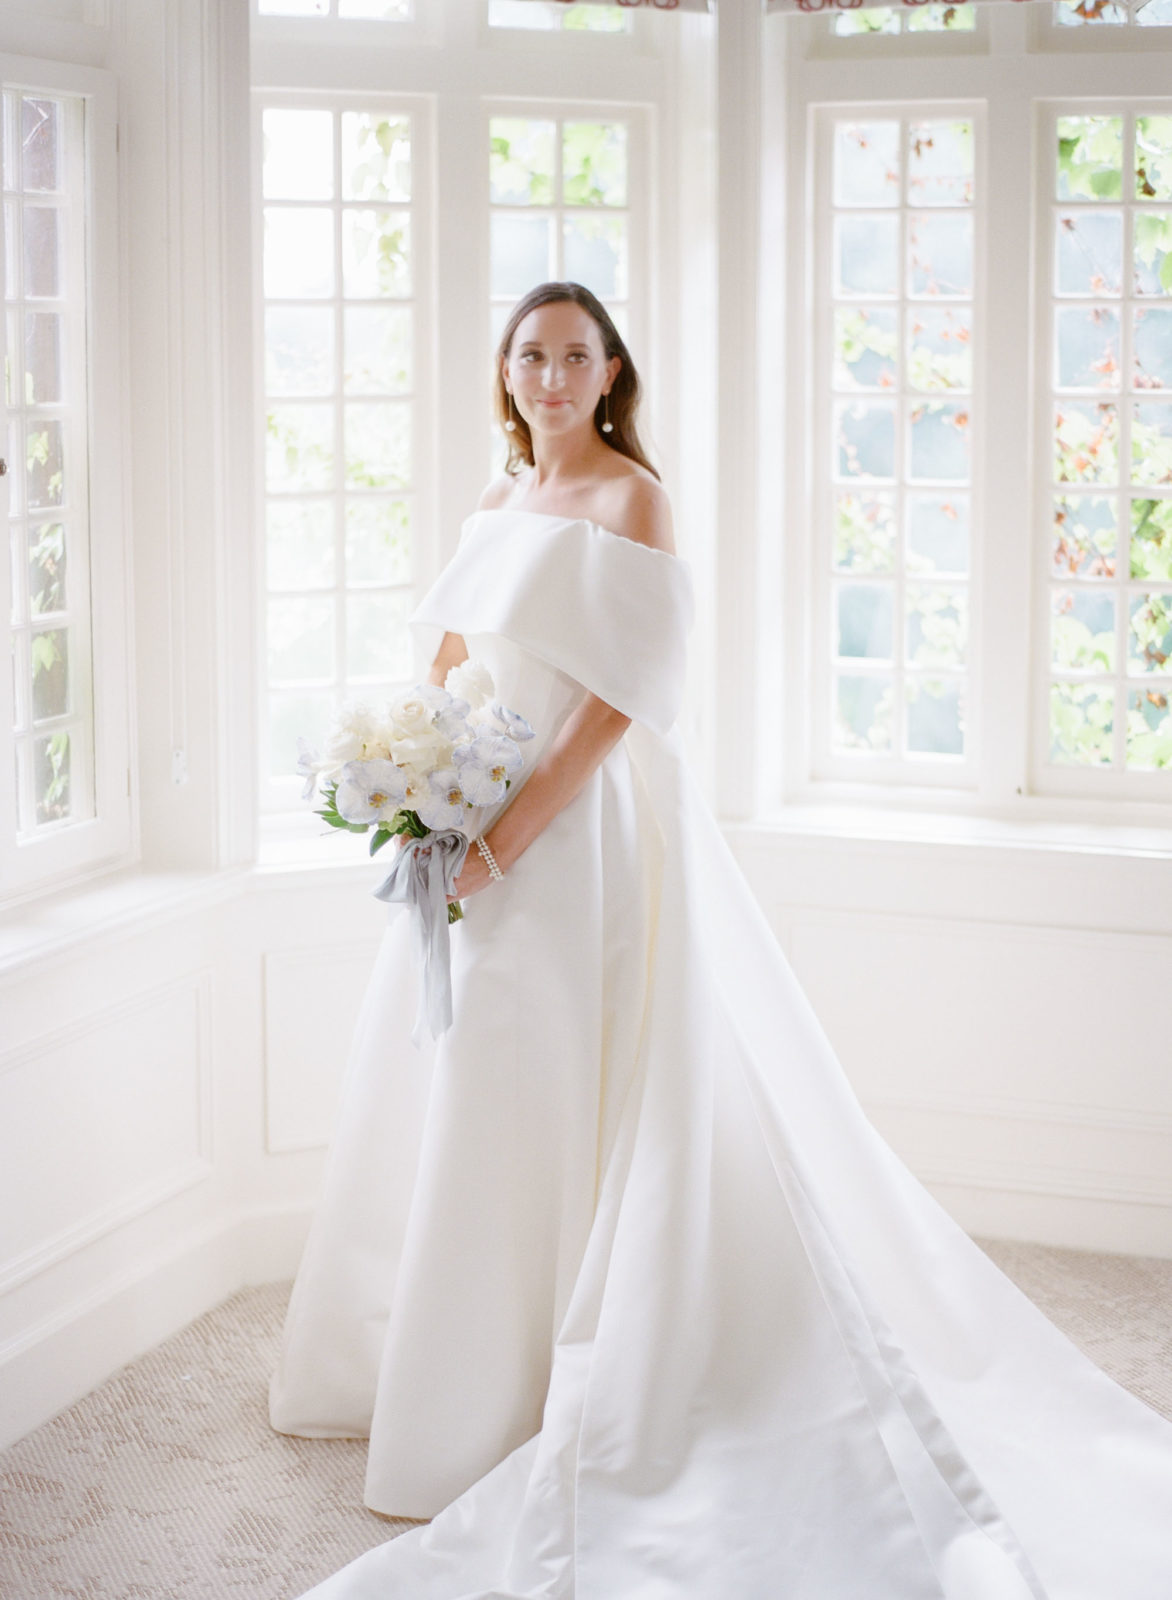 Blantyre Wedding Photographer | Berkshires Destination Wedding | Film Photographer | Luxury Wedding | Molly Carr Photography